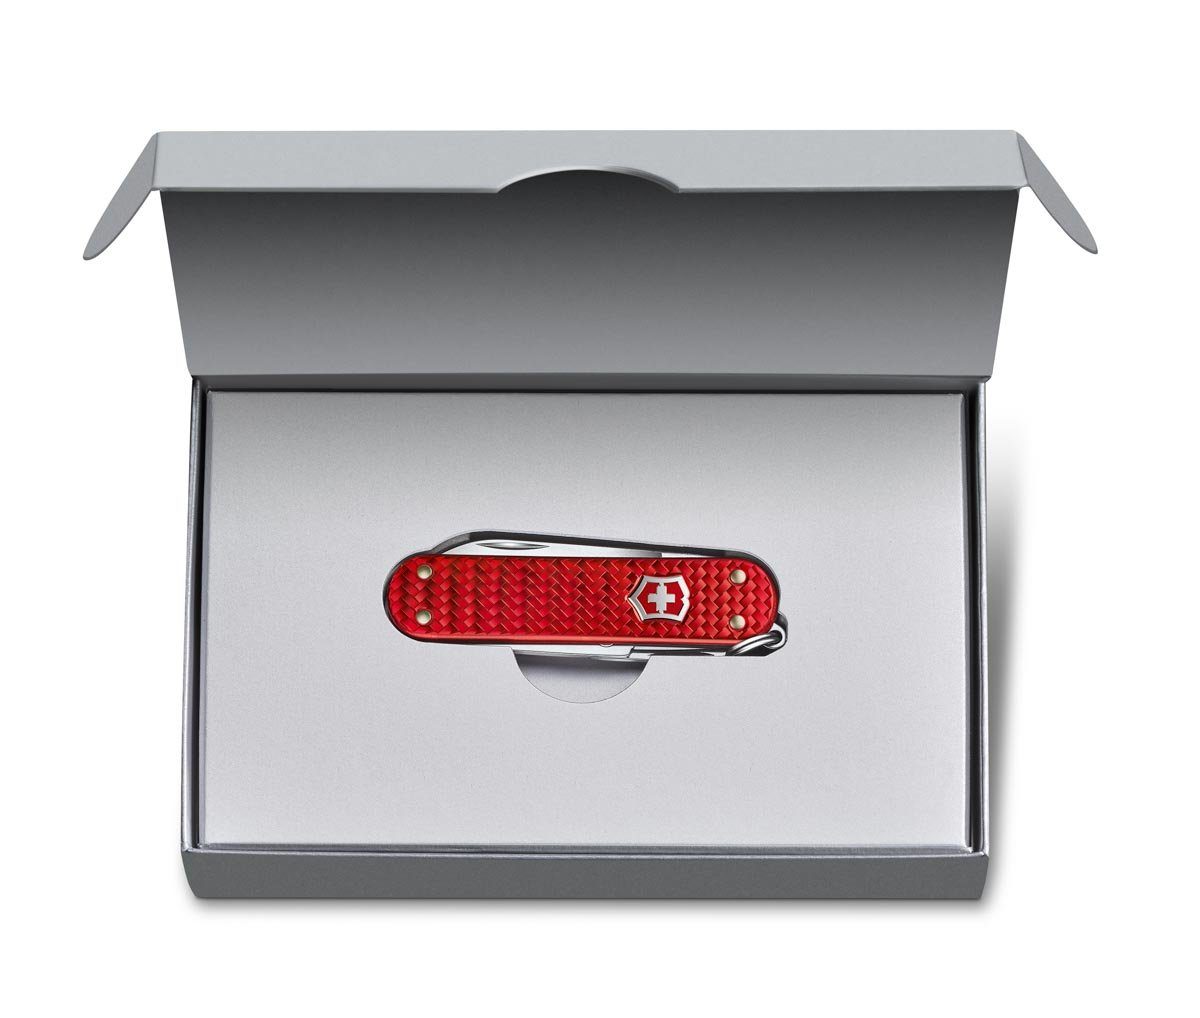 Victorinox Taschenmesser Classic SD Alox, Precious Iconic Red